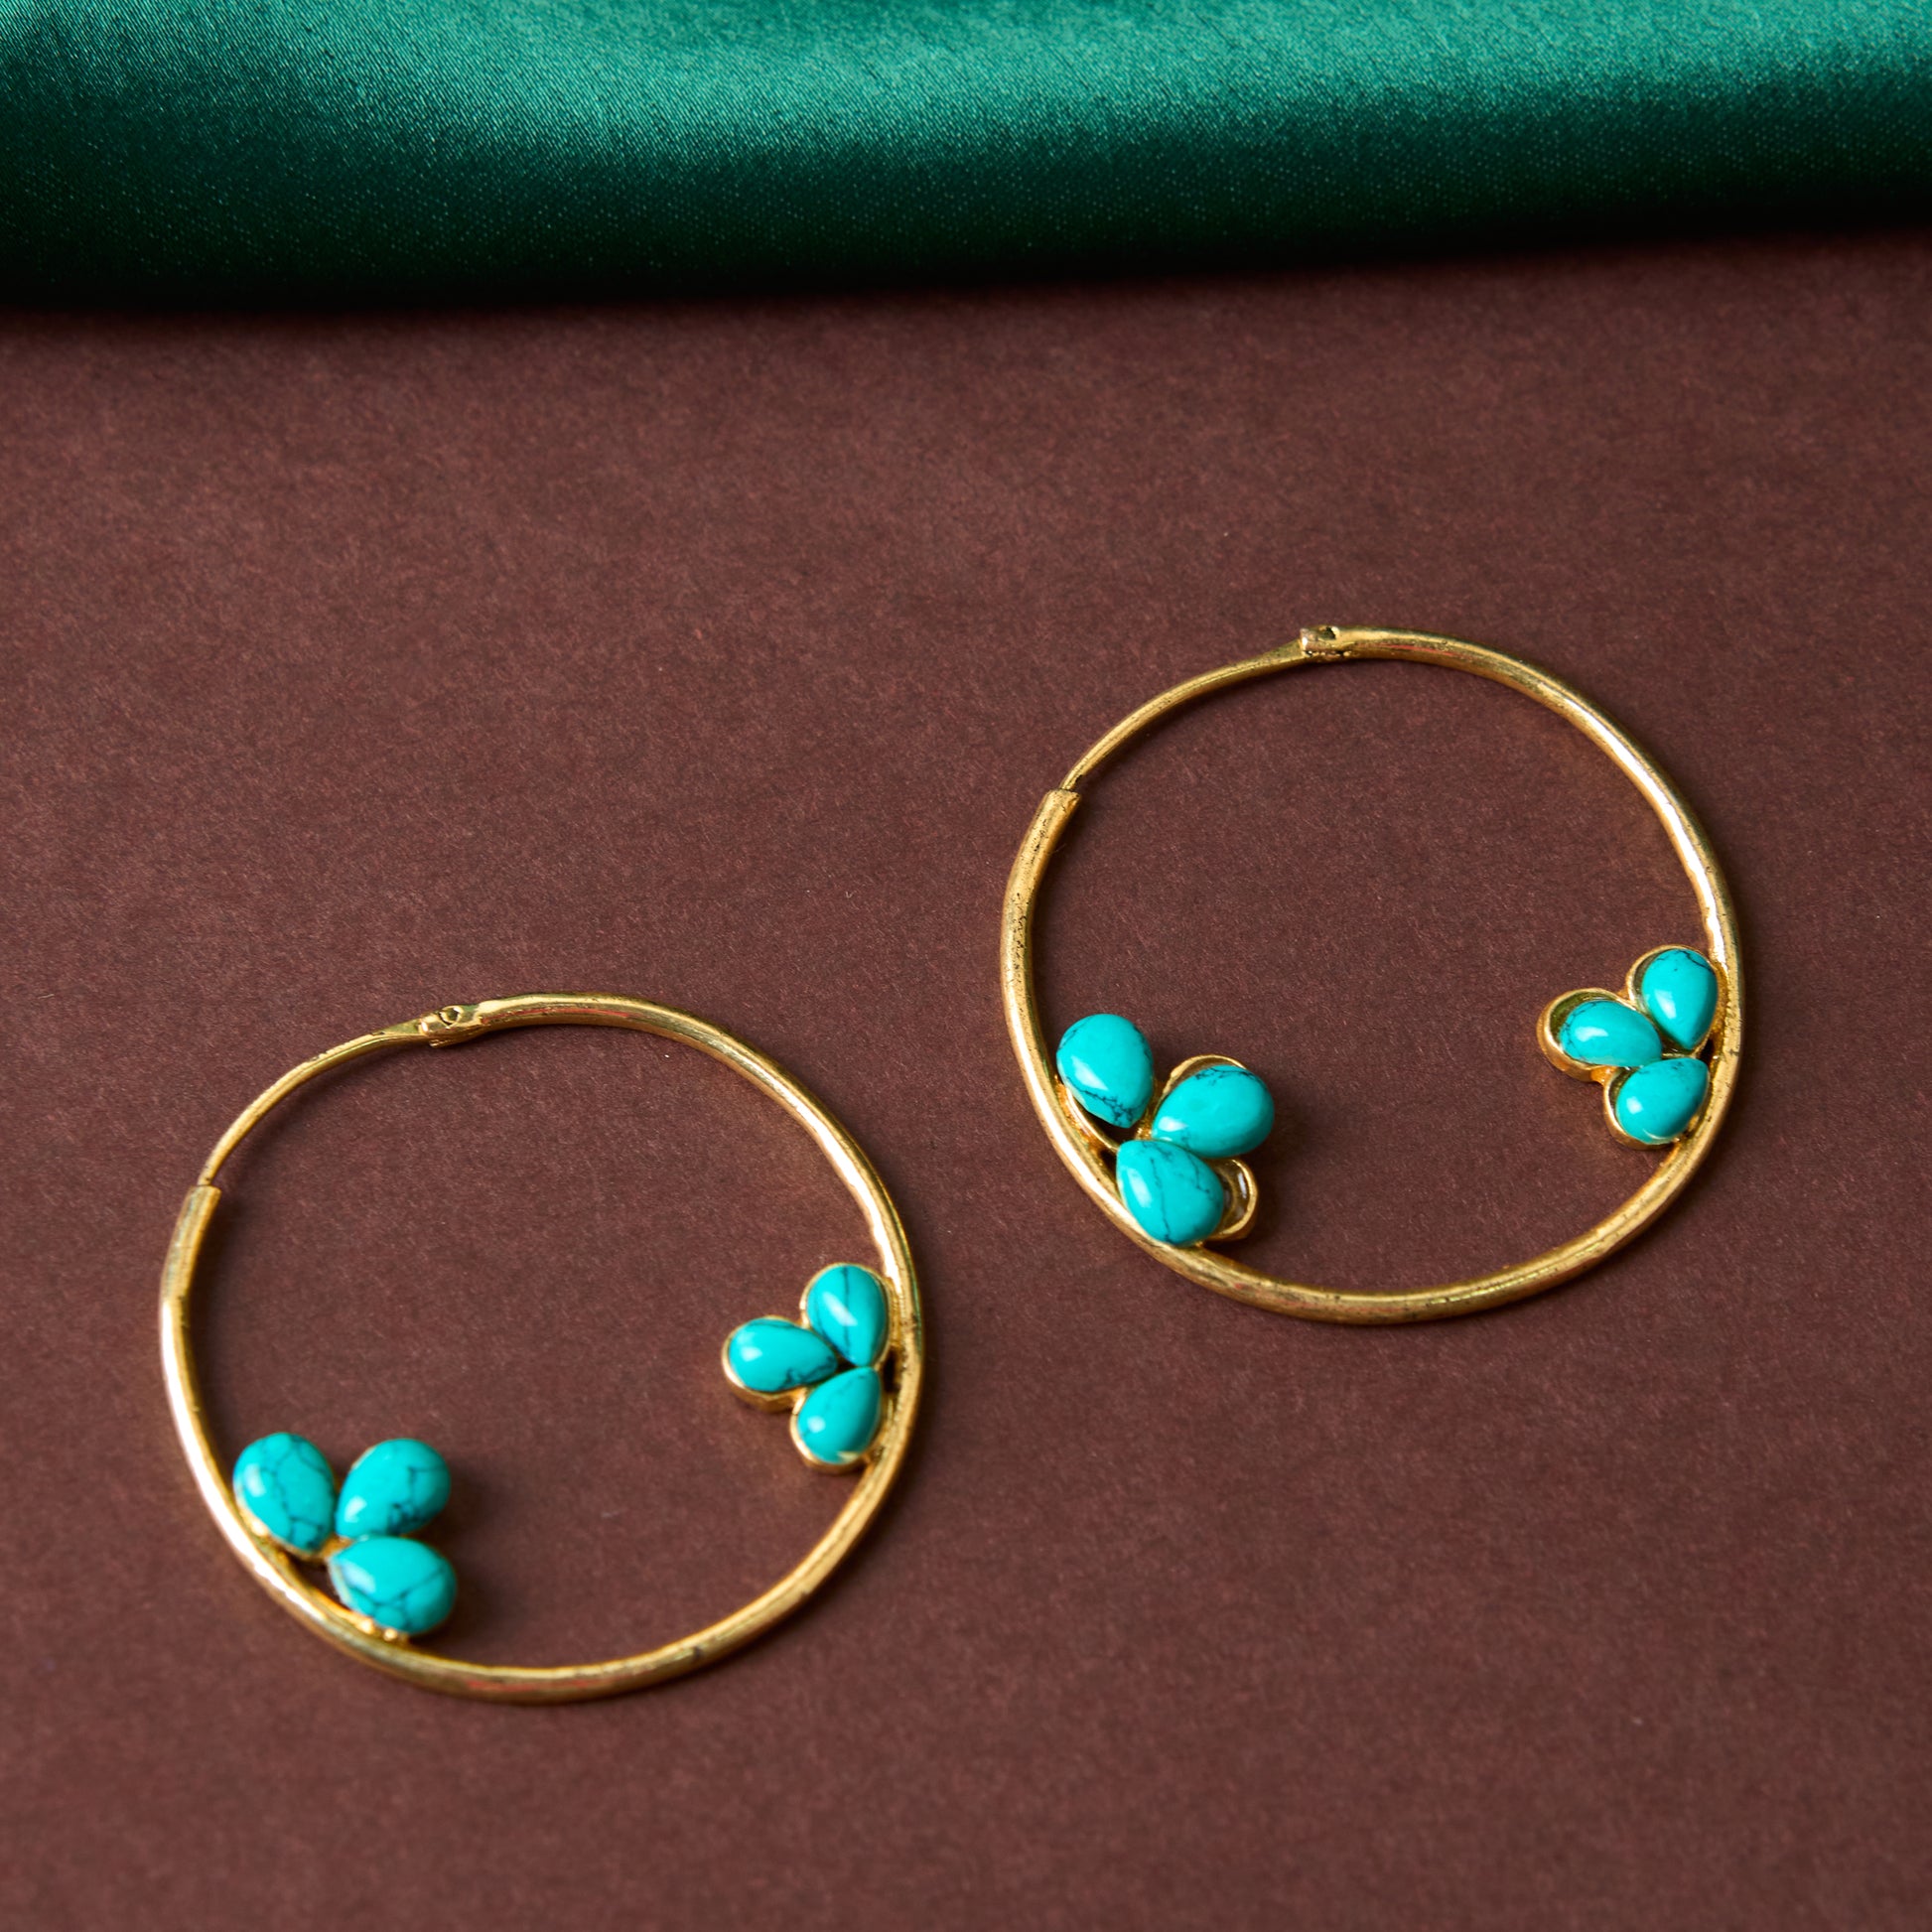 Moonstruck Indo-western Hoop Earrings for Women (Turquoise) - www.MoonstruckINC.com